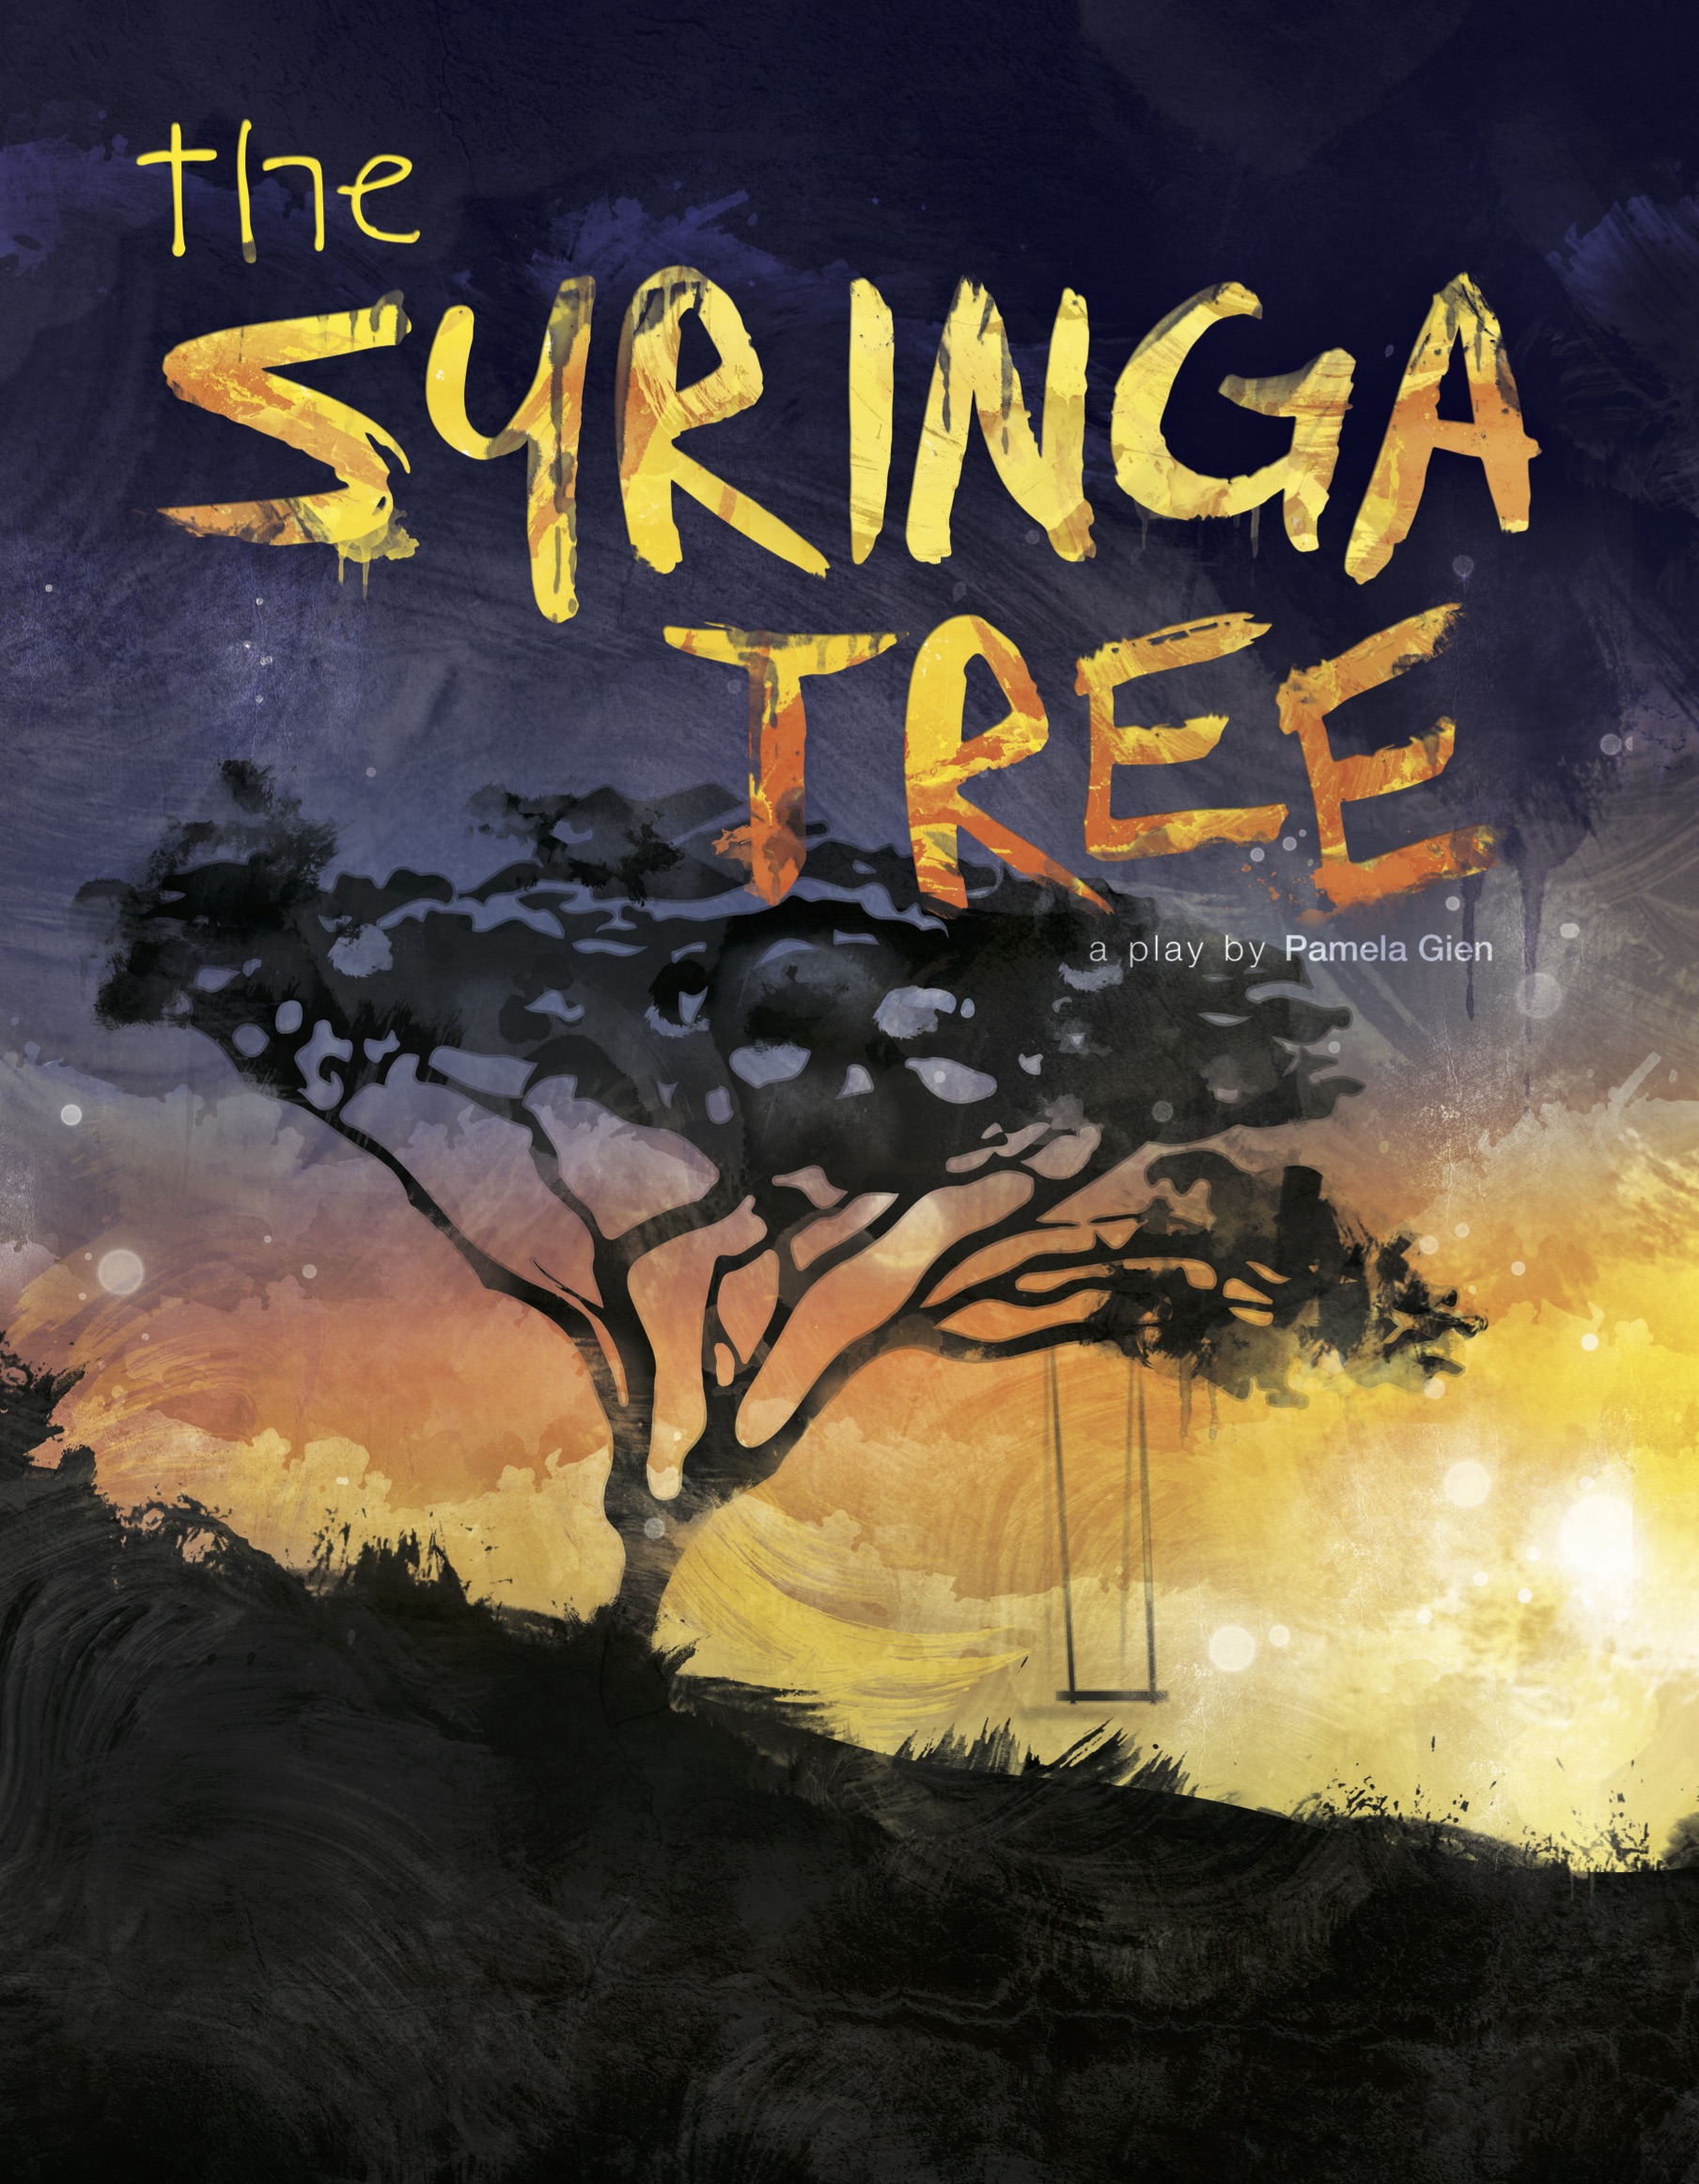 syringa tree poster image.jpg